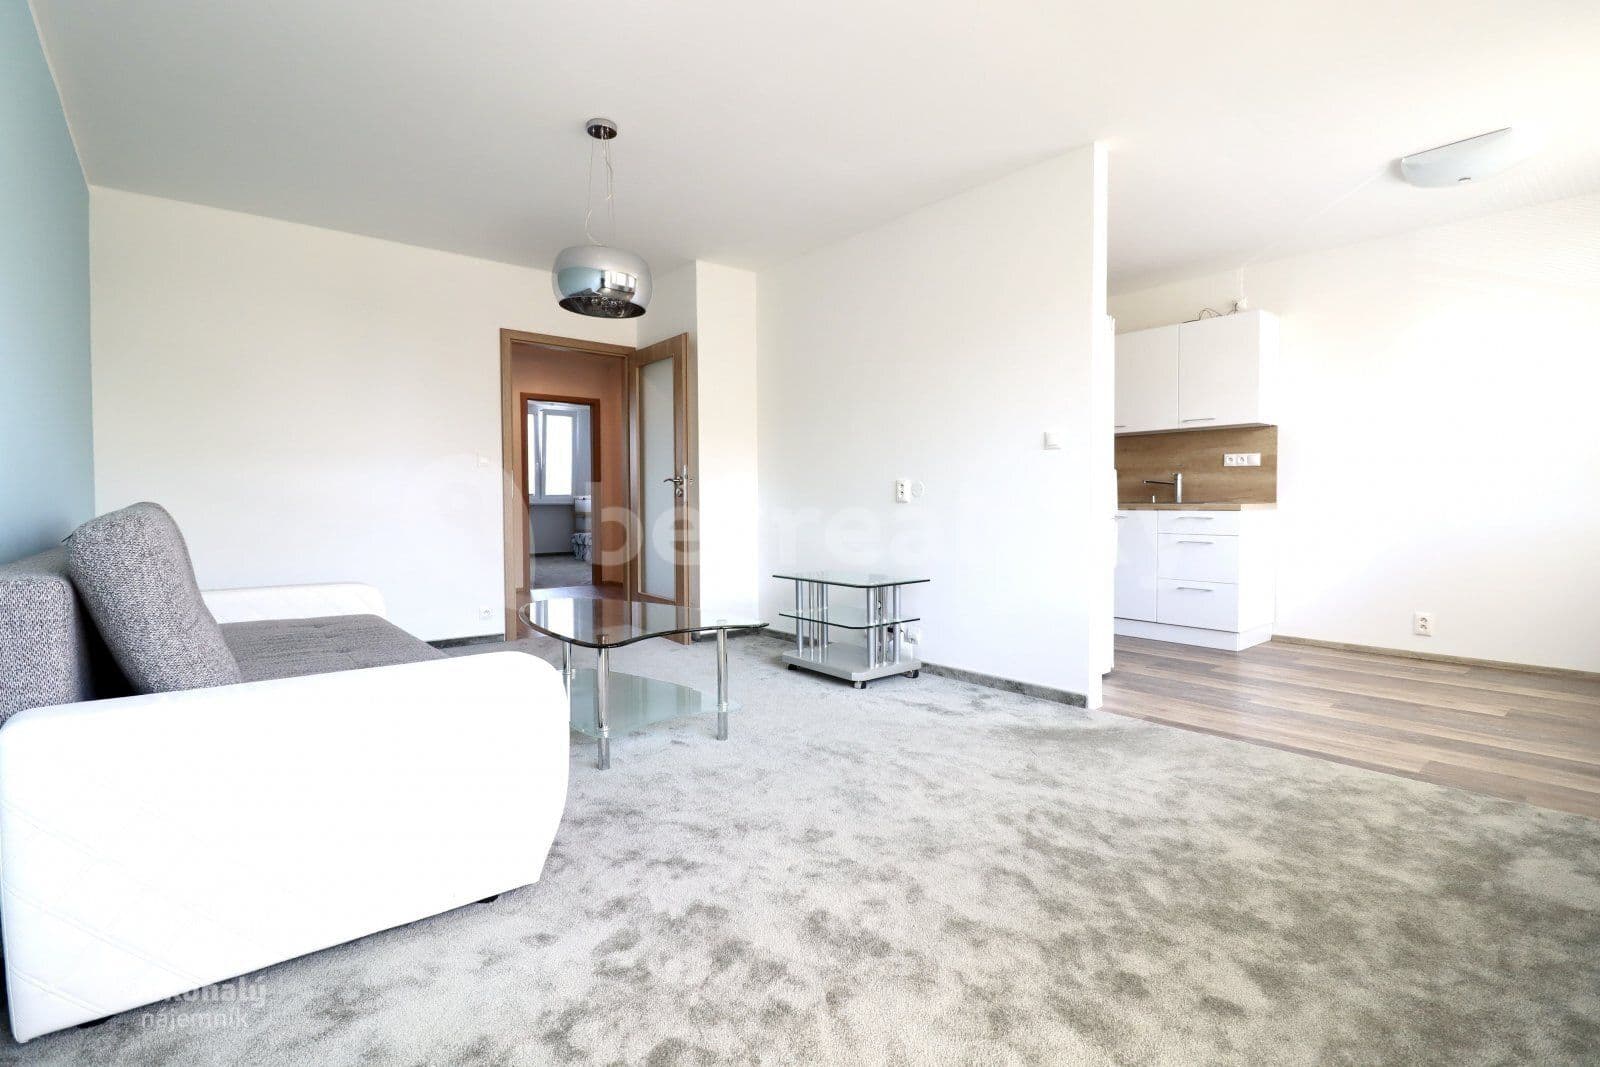 2 bedroom with open-plan kitchen flat to rent, 82 m², Plickova, Prague, Prague